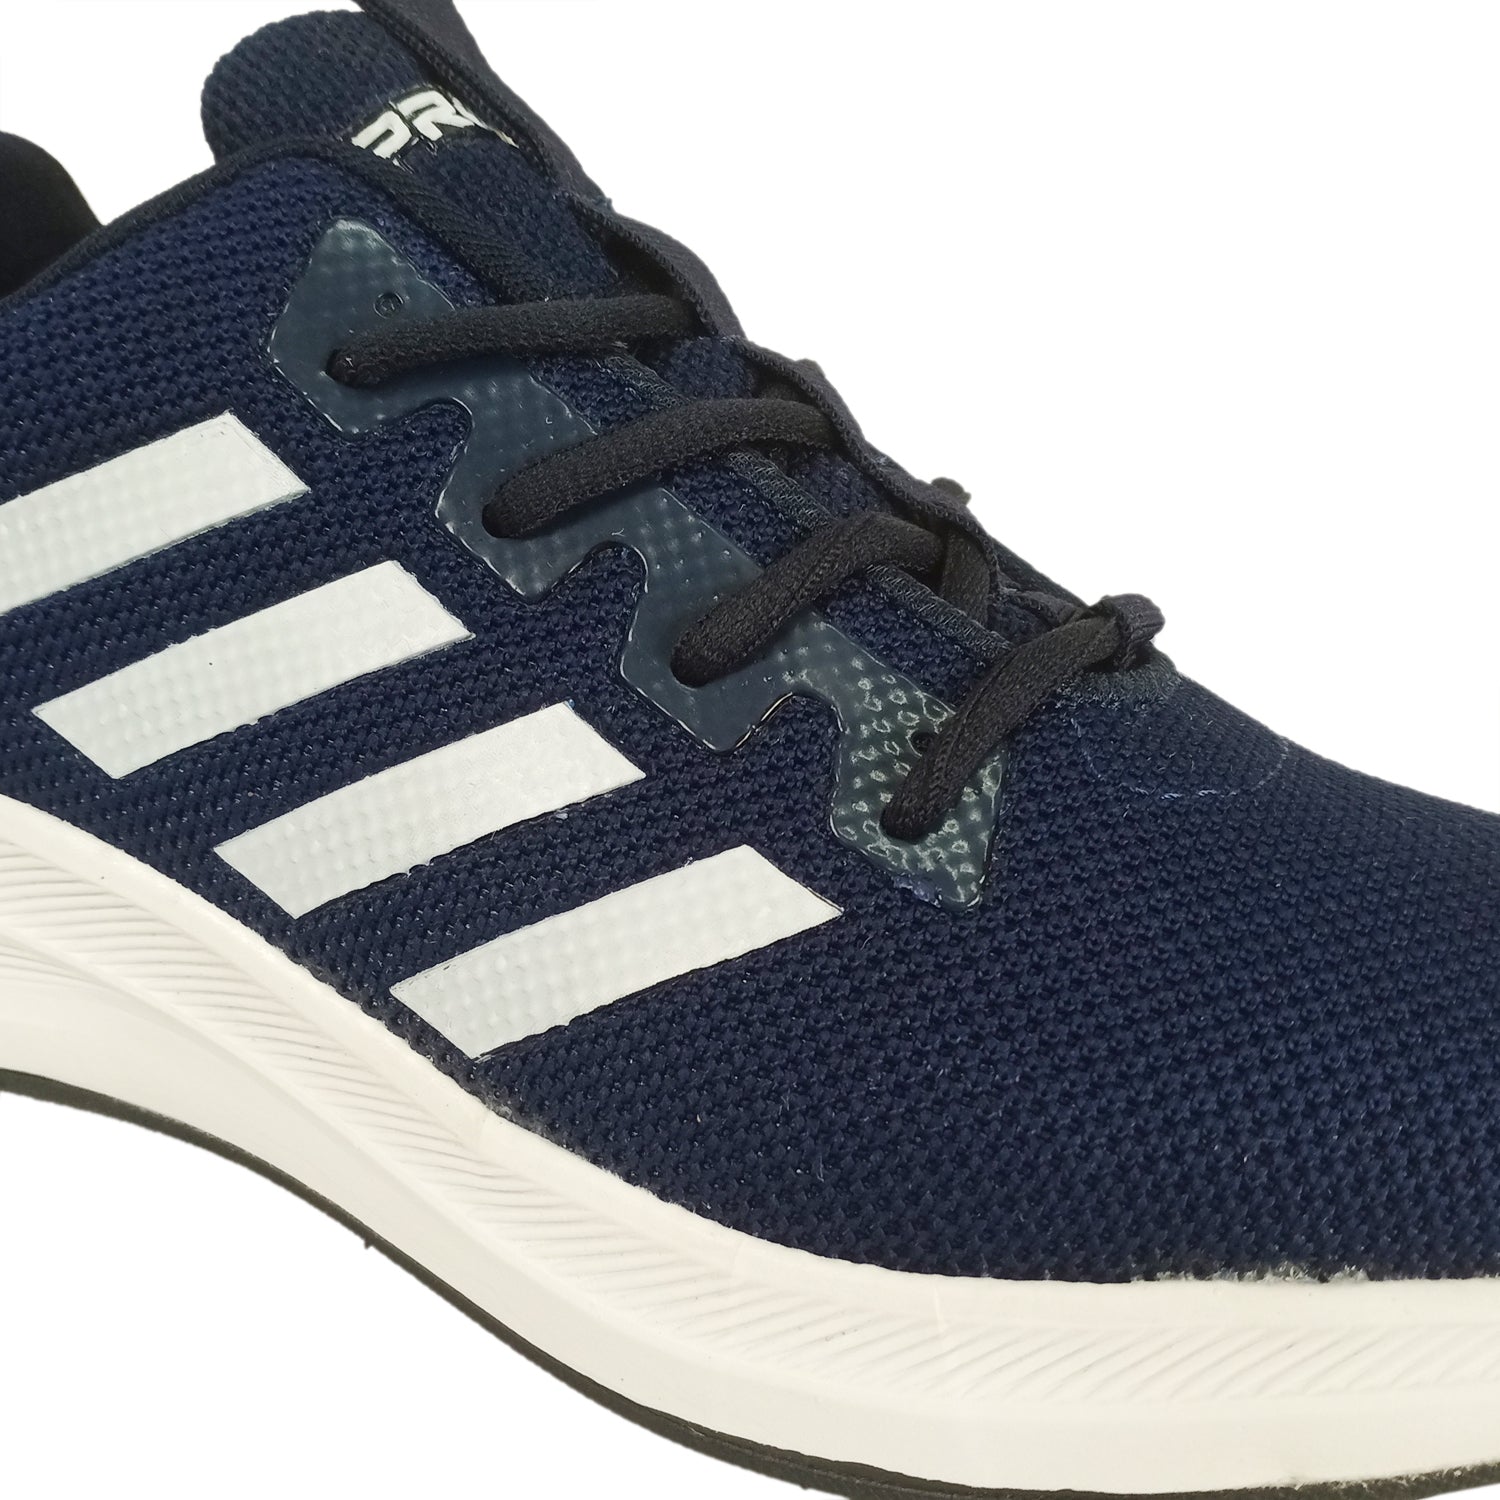 Prokick Jogger Running/Walking Shoes, Blue - Best Price online Prokicksports.com